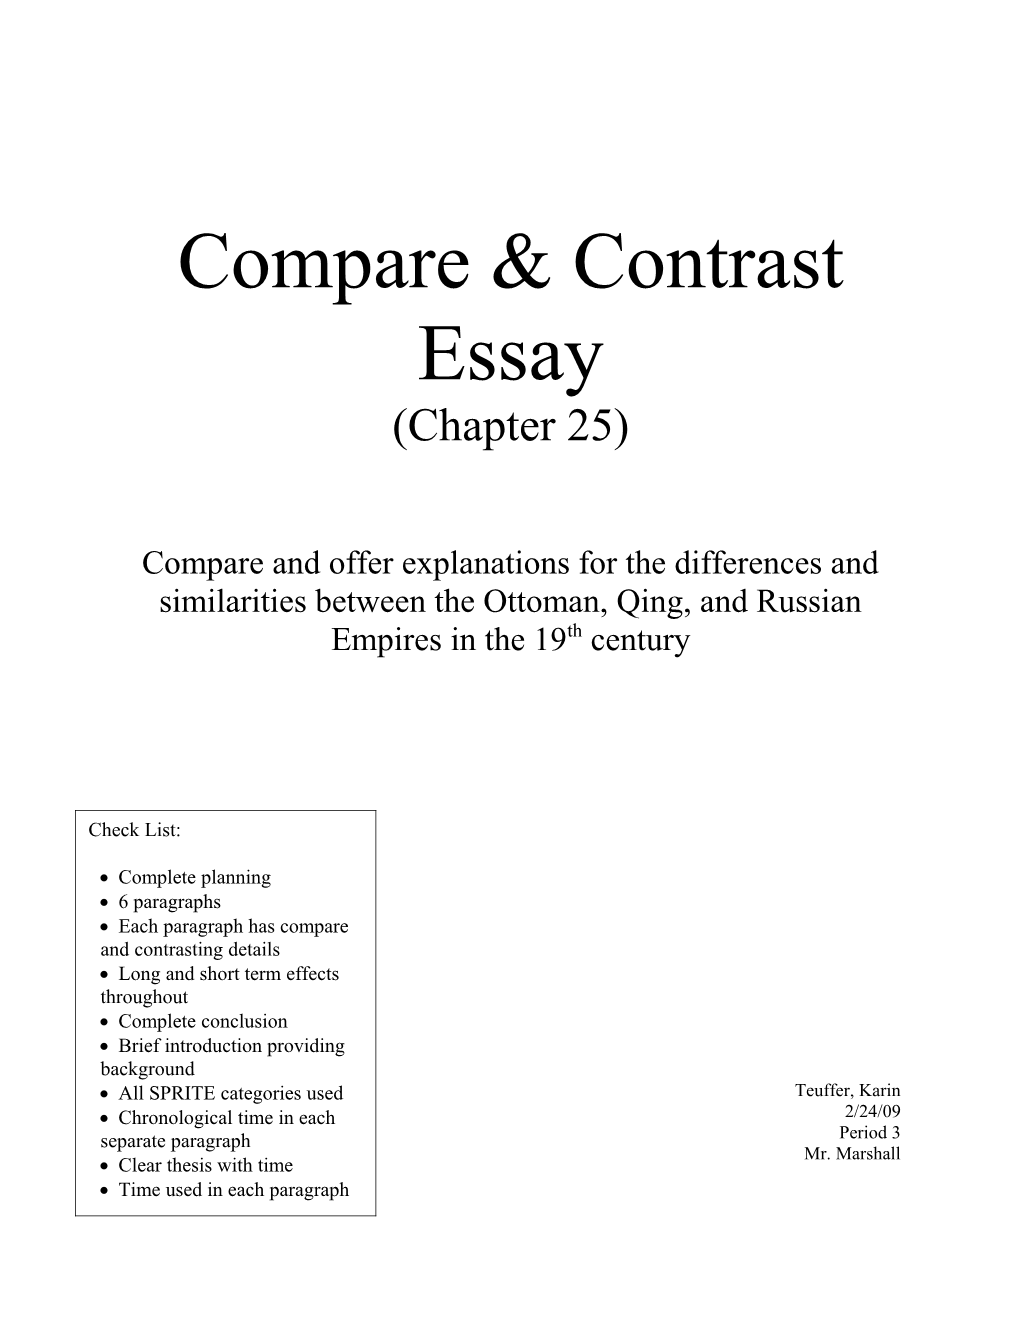 Compare & Contrast Essay